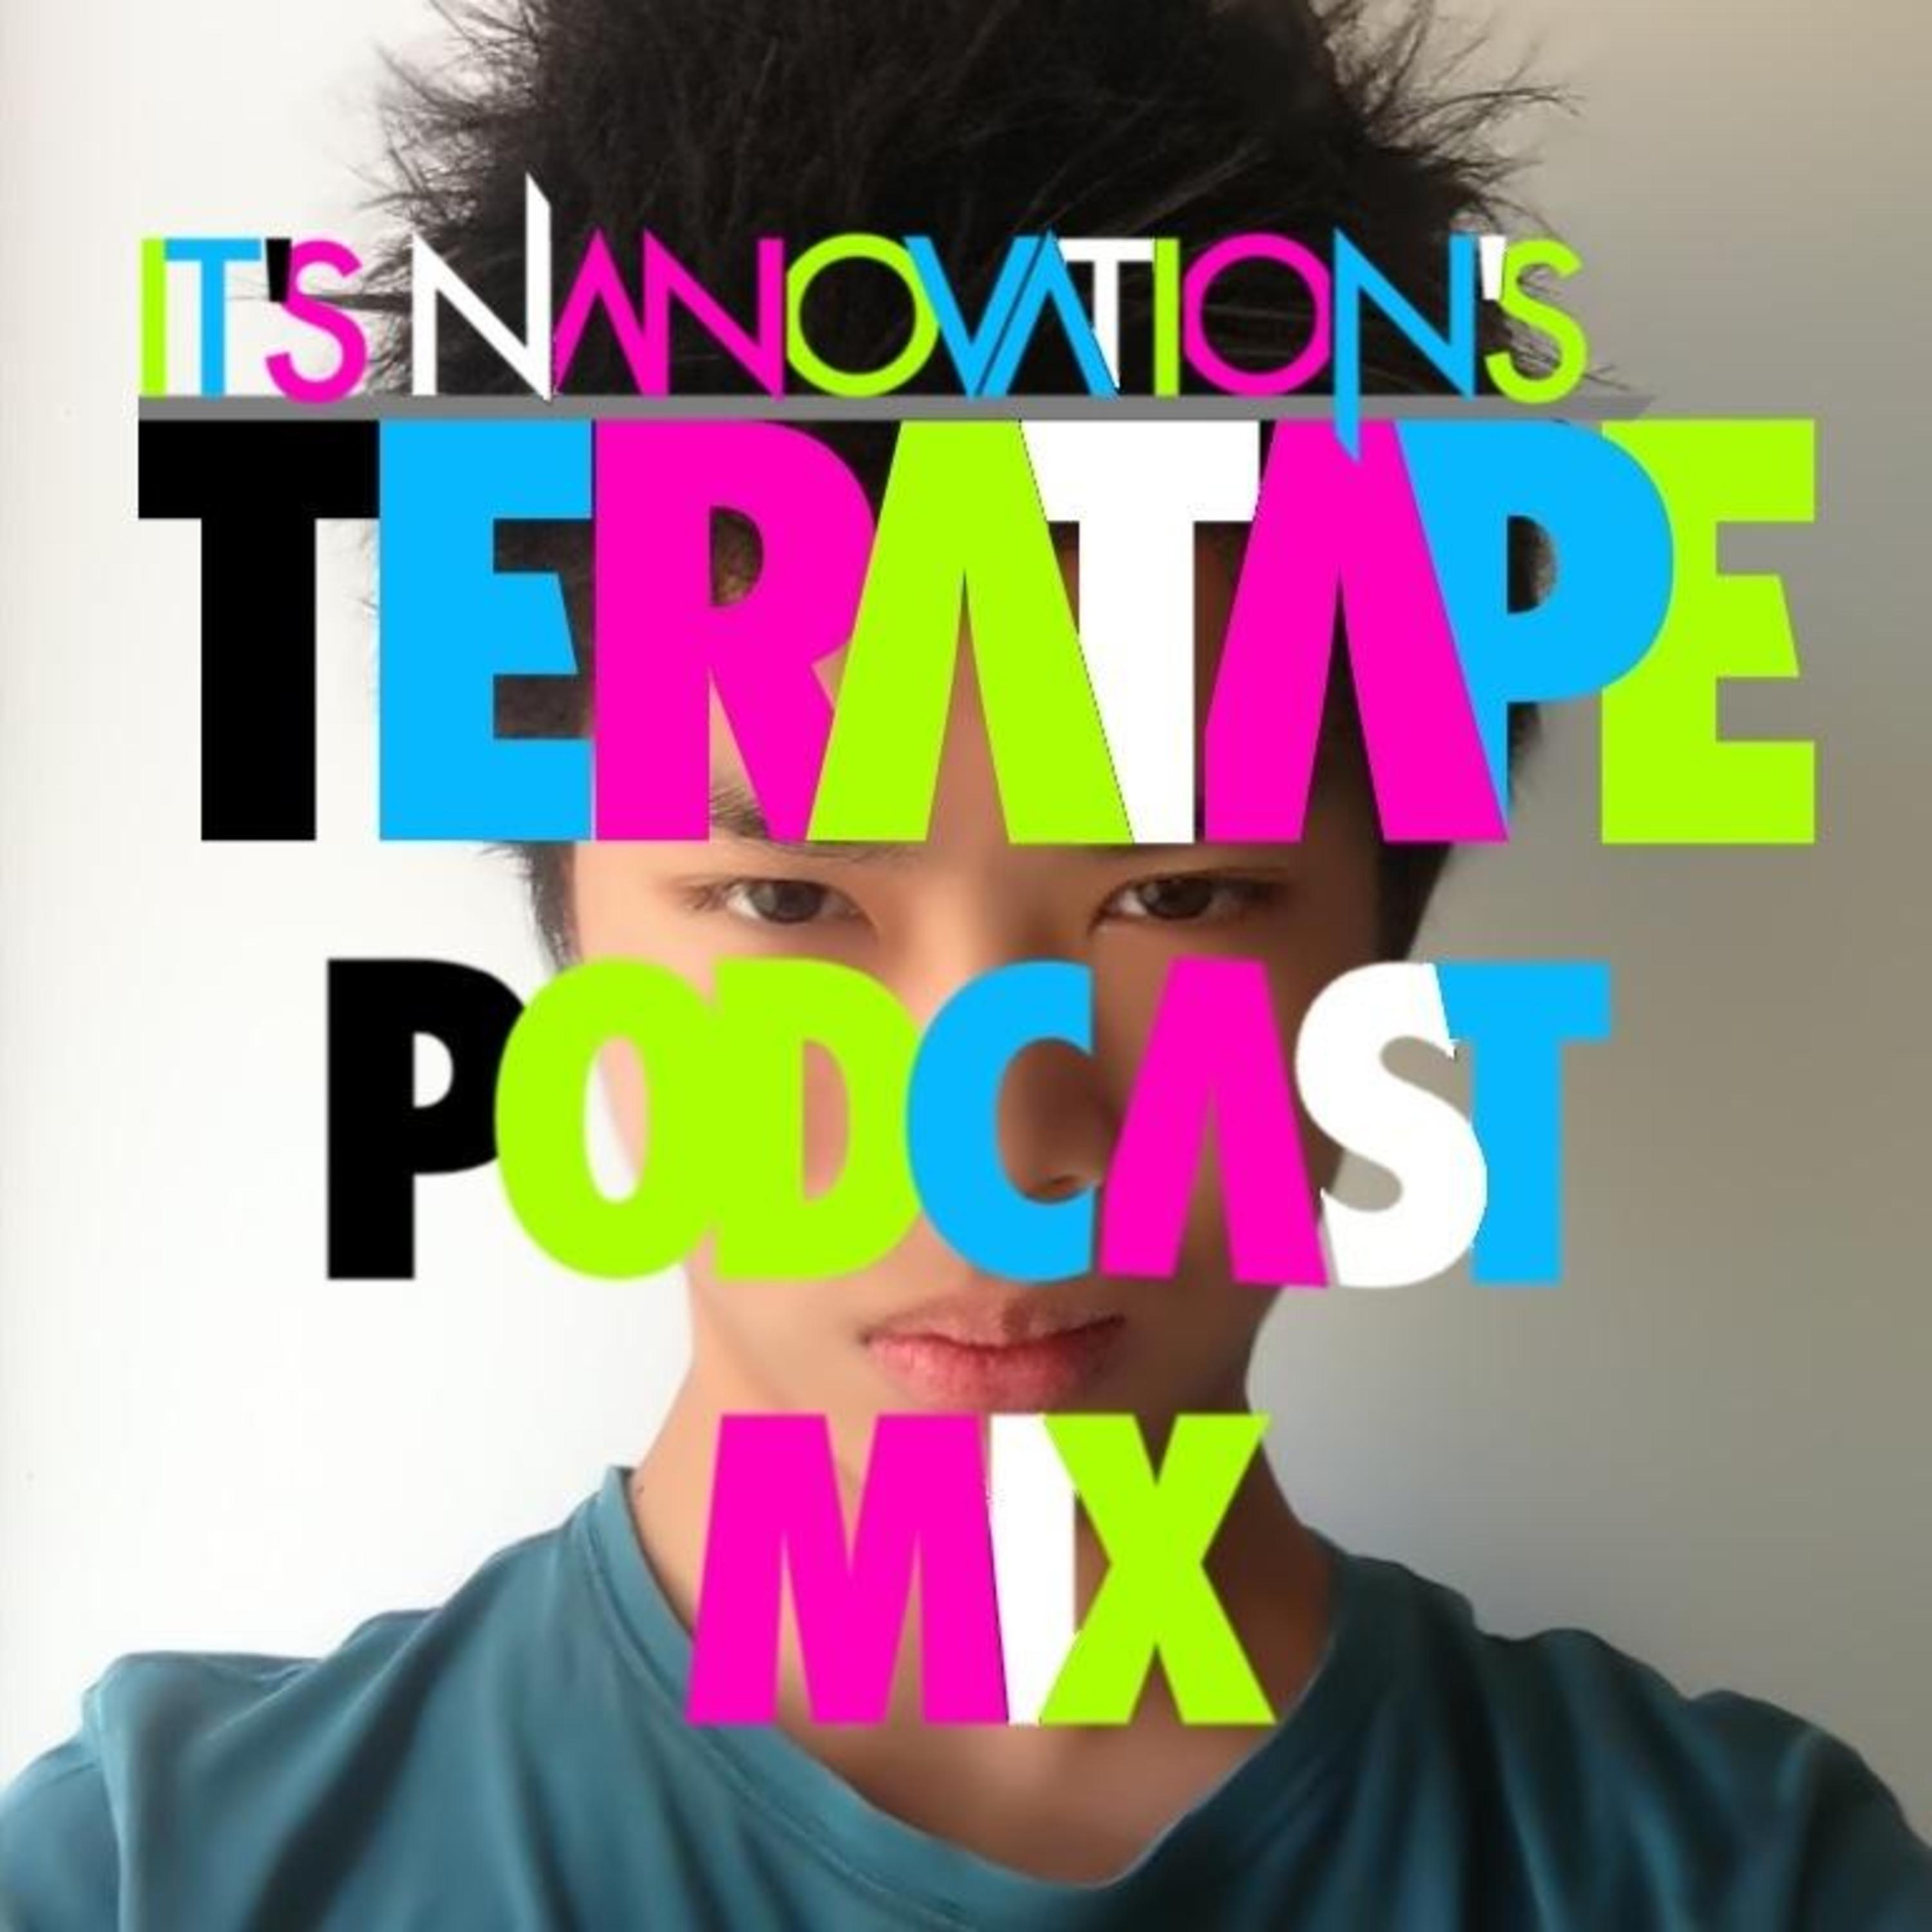 Nanovation's Teratape Podcast Mix